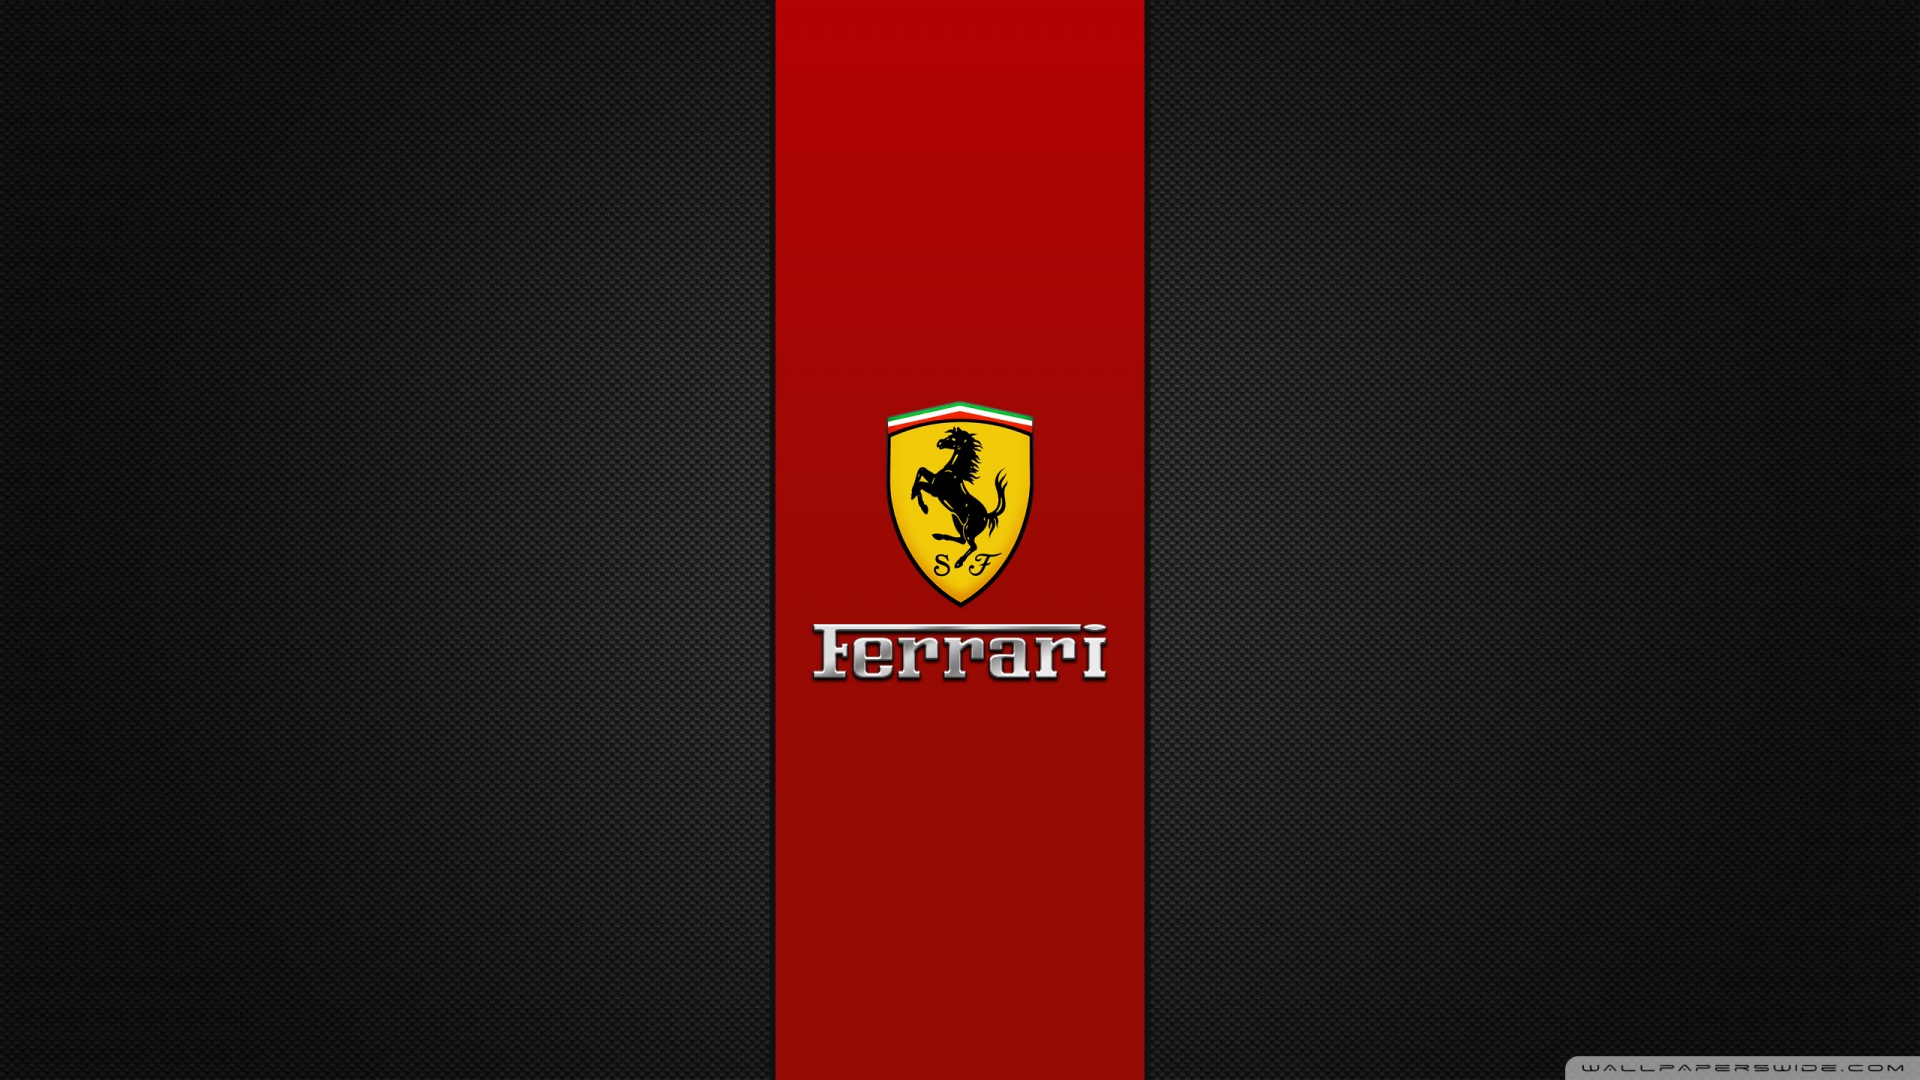 Ferrari Ultra Hd Desktop Background Wallpaper For Multi Display Dual Monitor